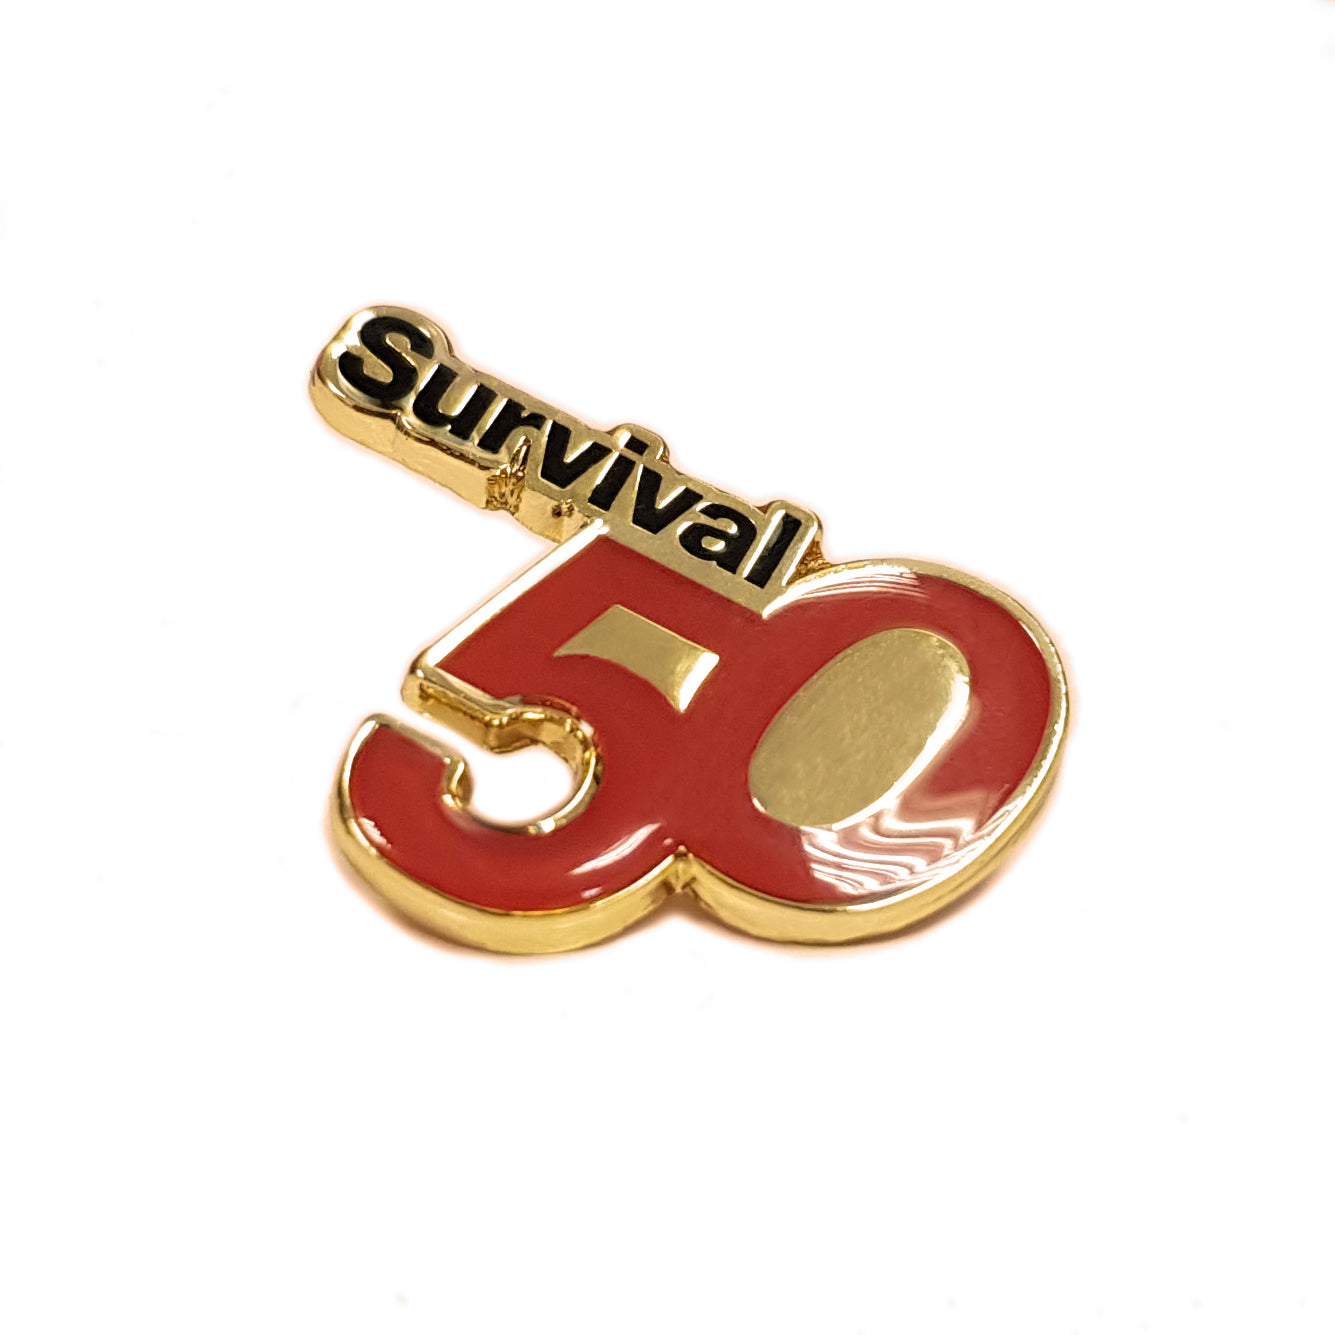 50th Anniversary pin badge